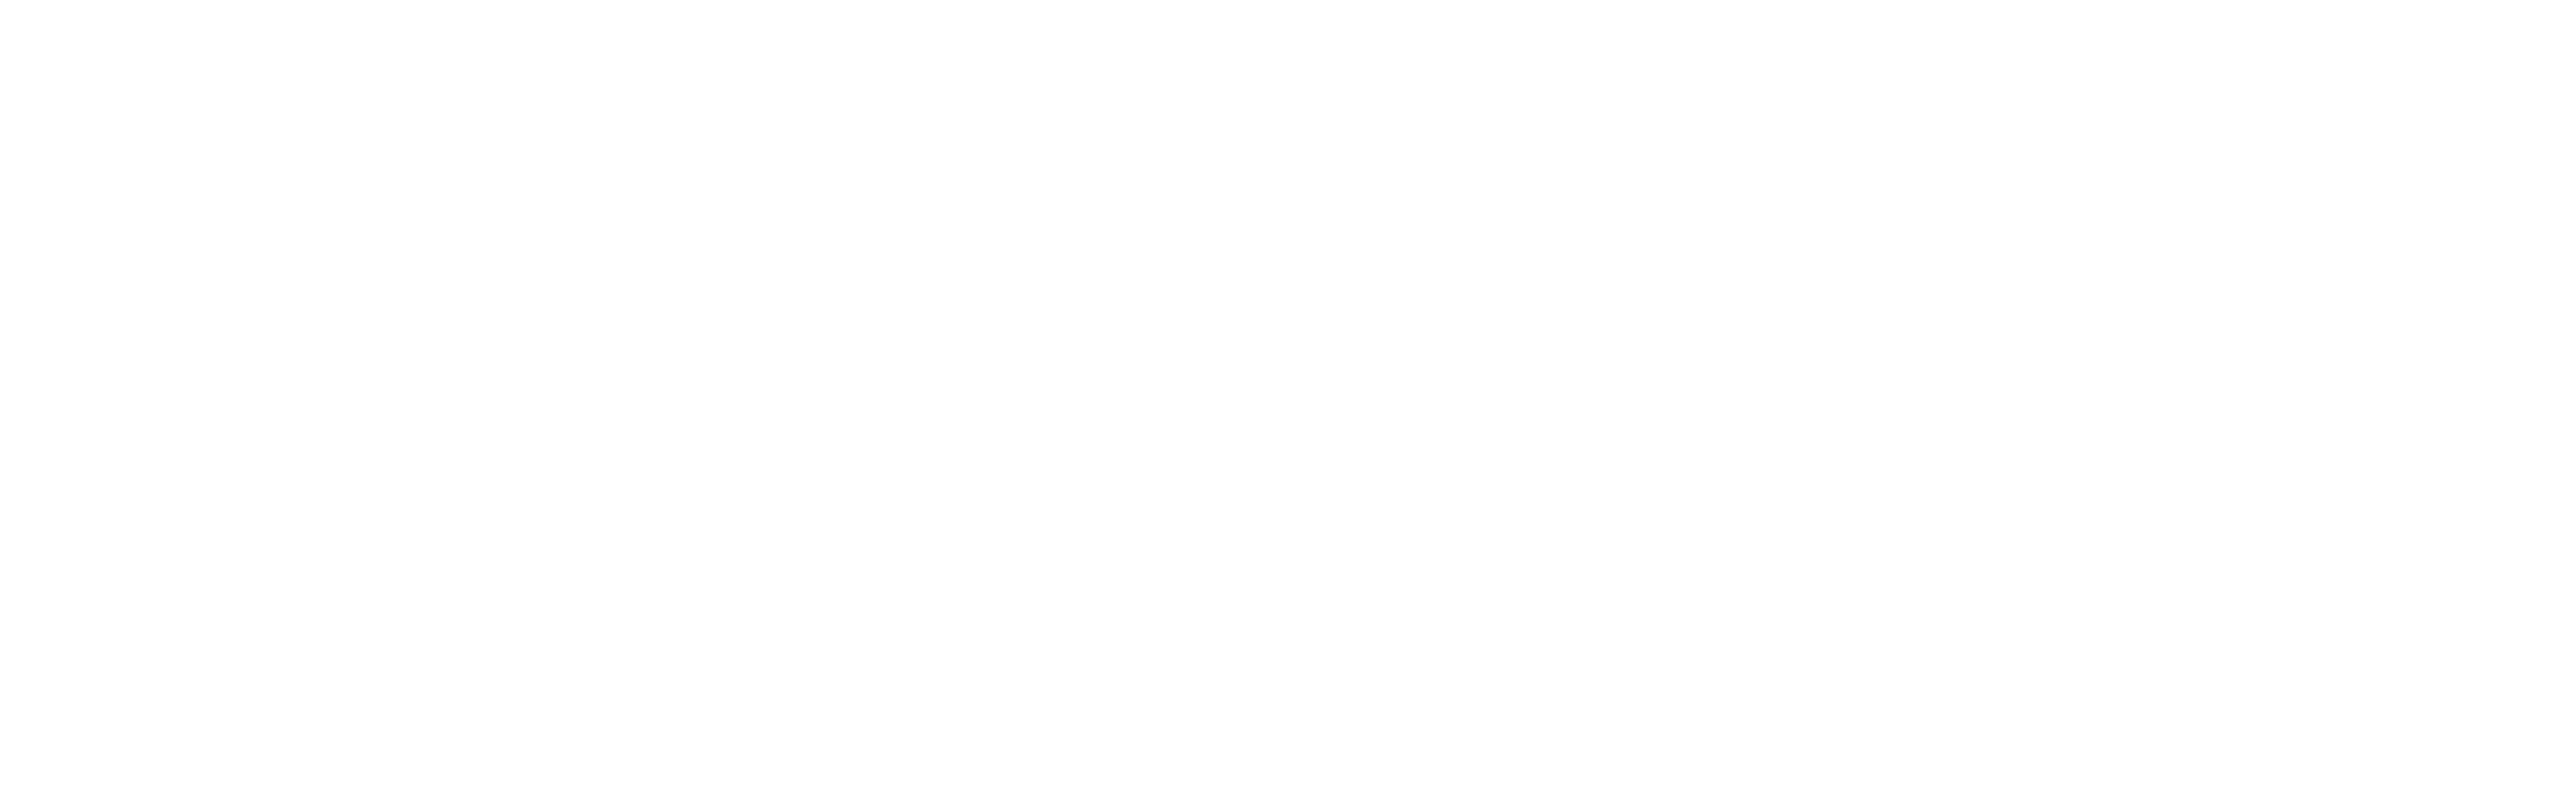 ee logo scholarus tagline white